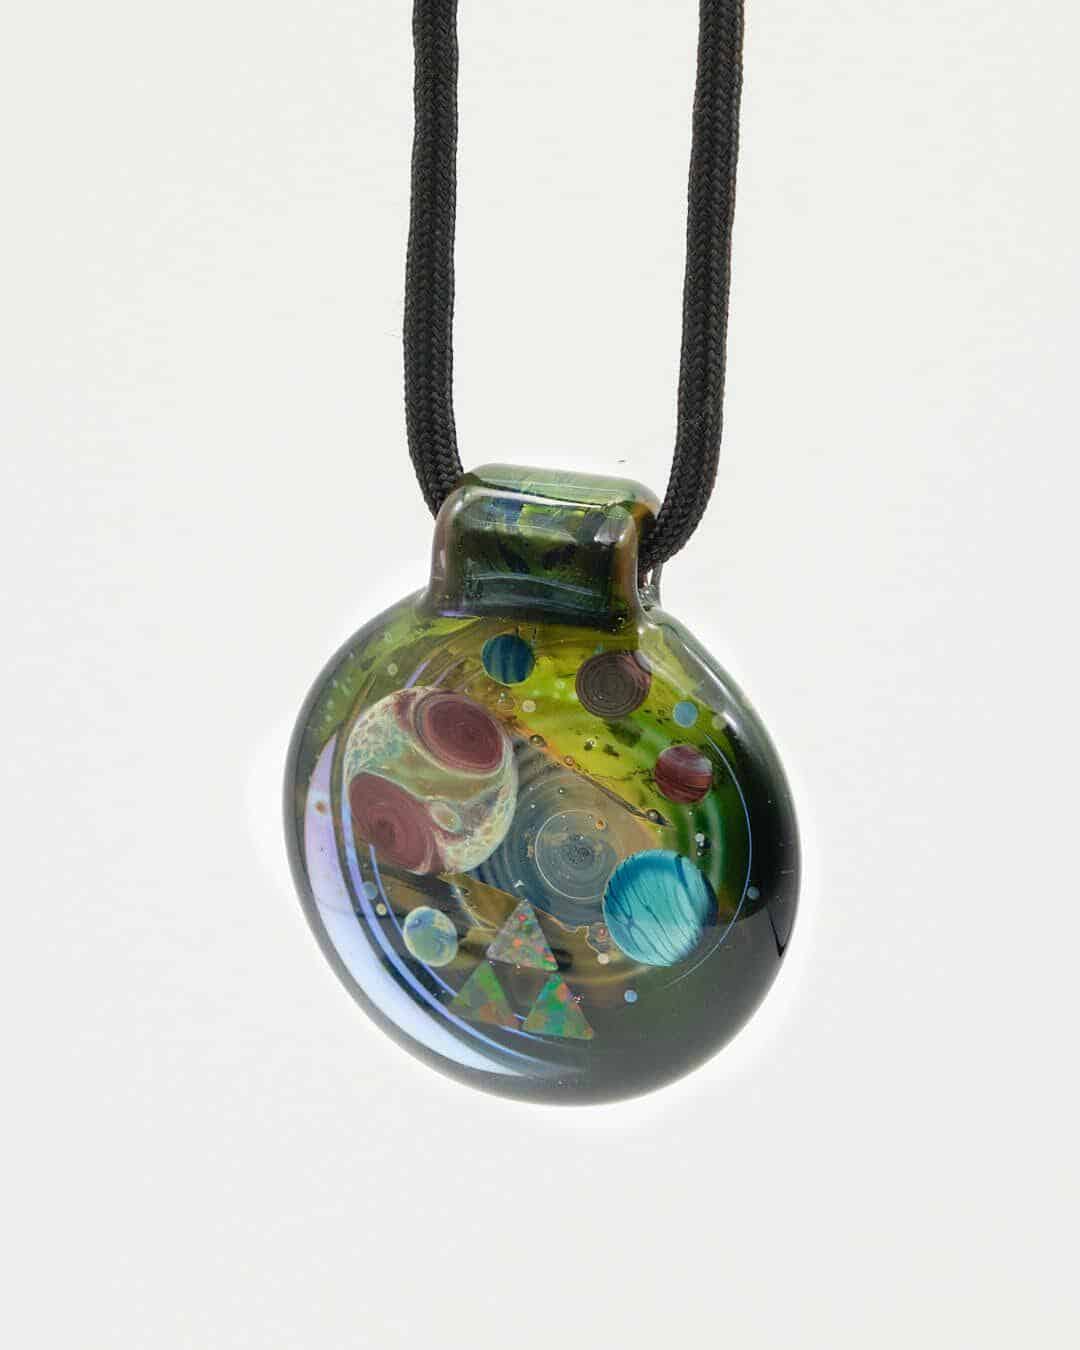 artisan-crafted glass pendant - Opalated Galaxy Pendant #1 by Jolex